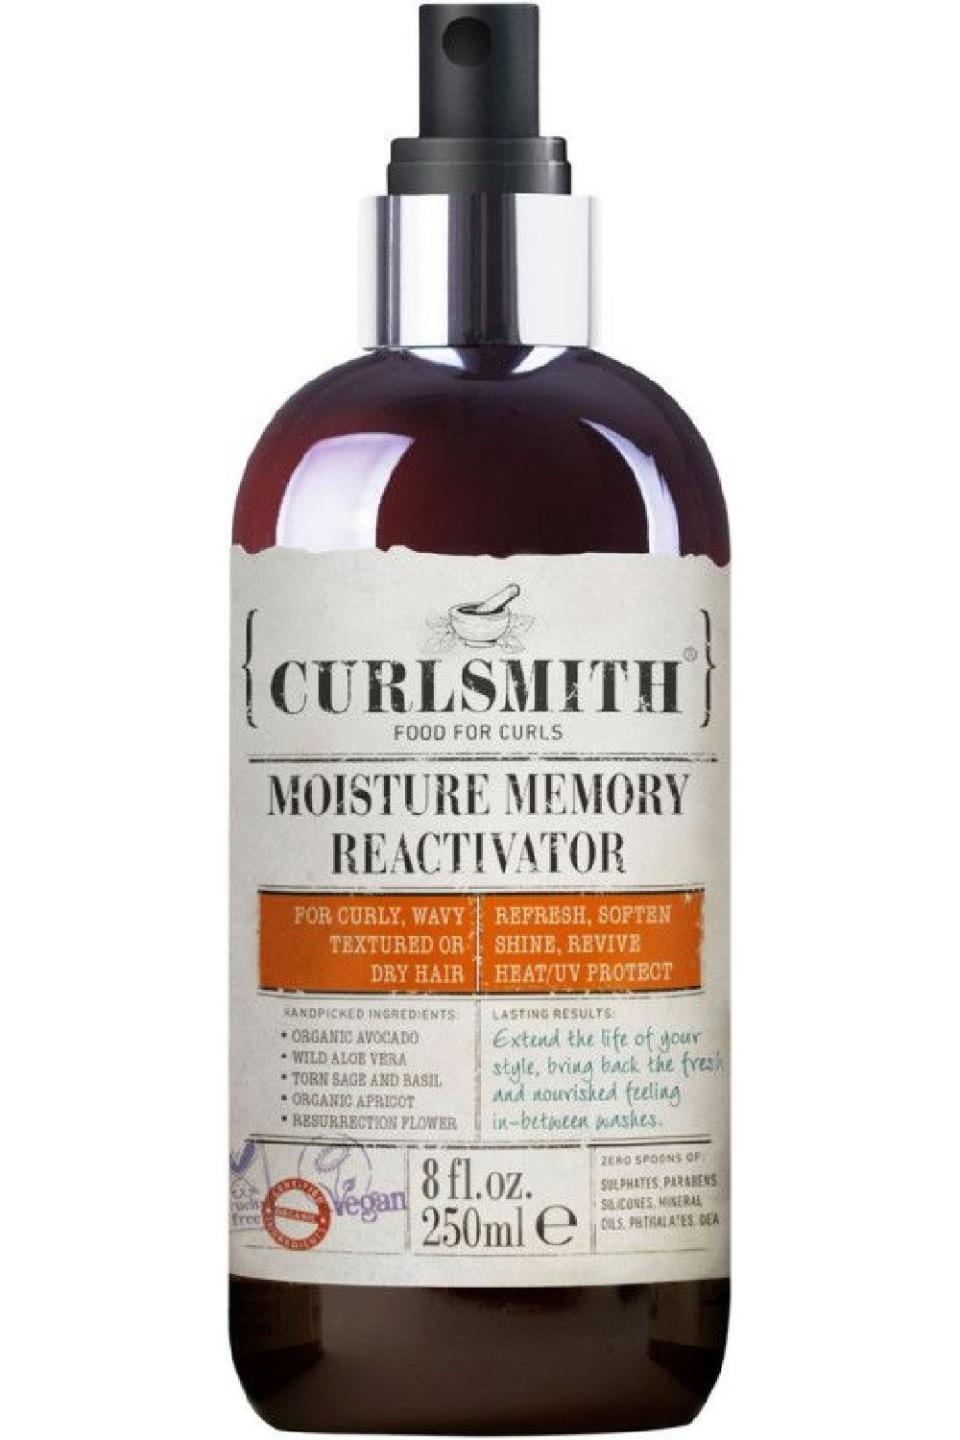 4) Curlsmith Moisture Memory Reactivator